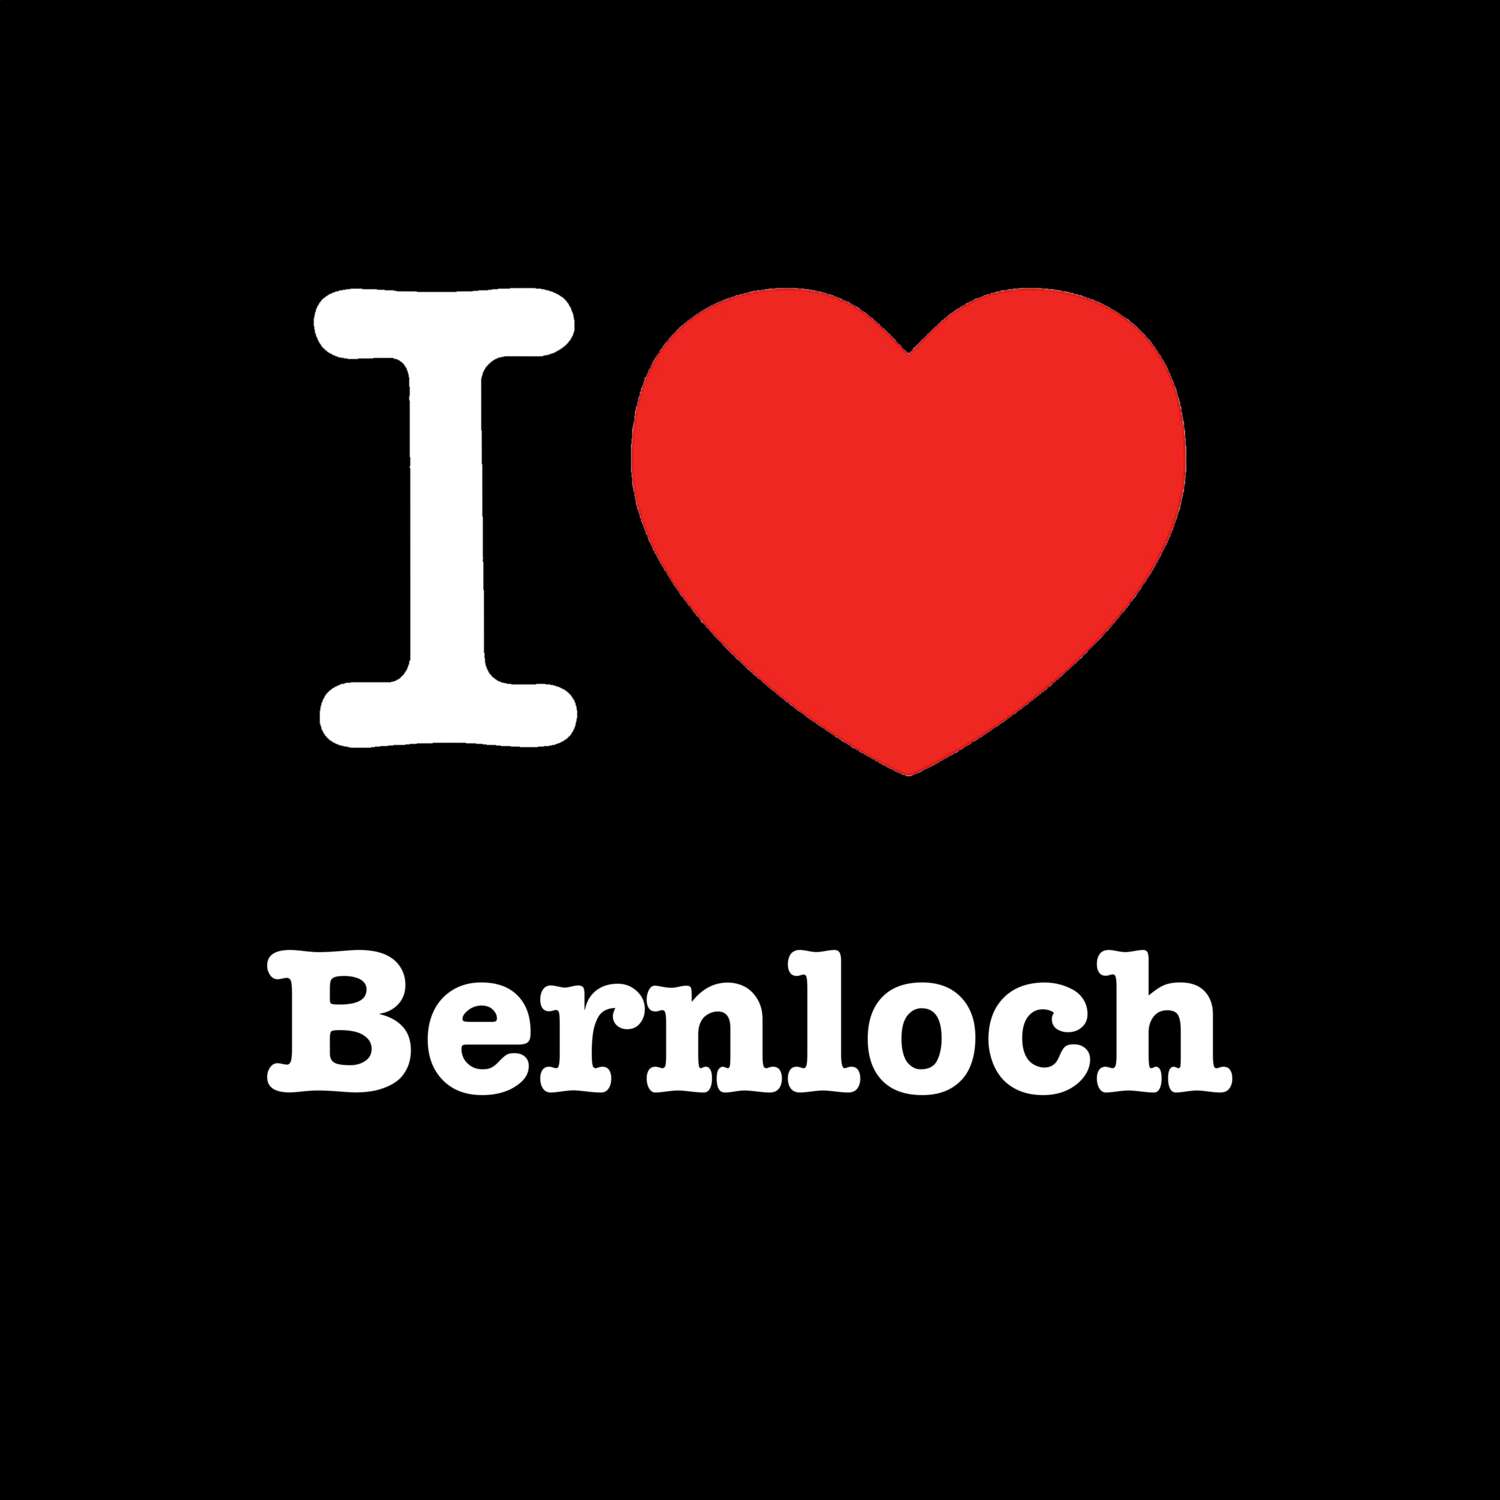 Bernloch T-Shirt »I love«